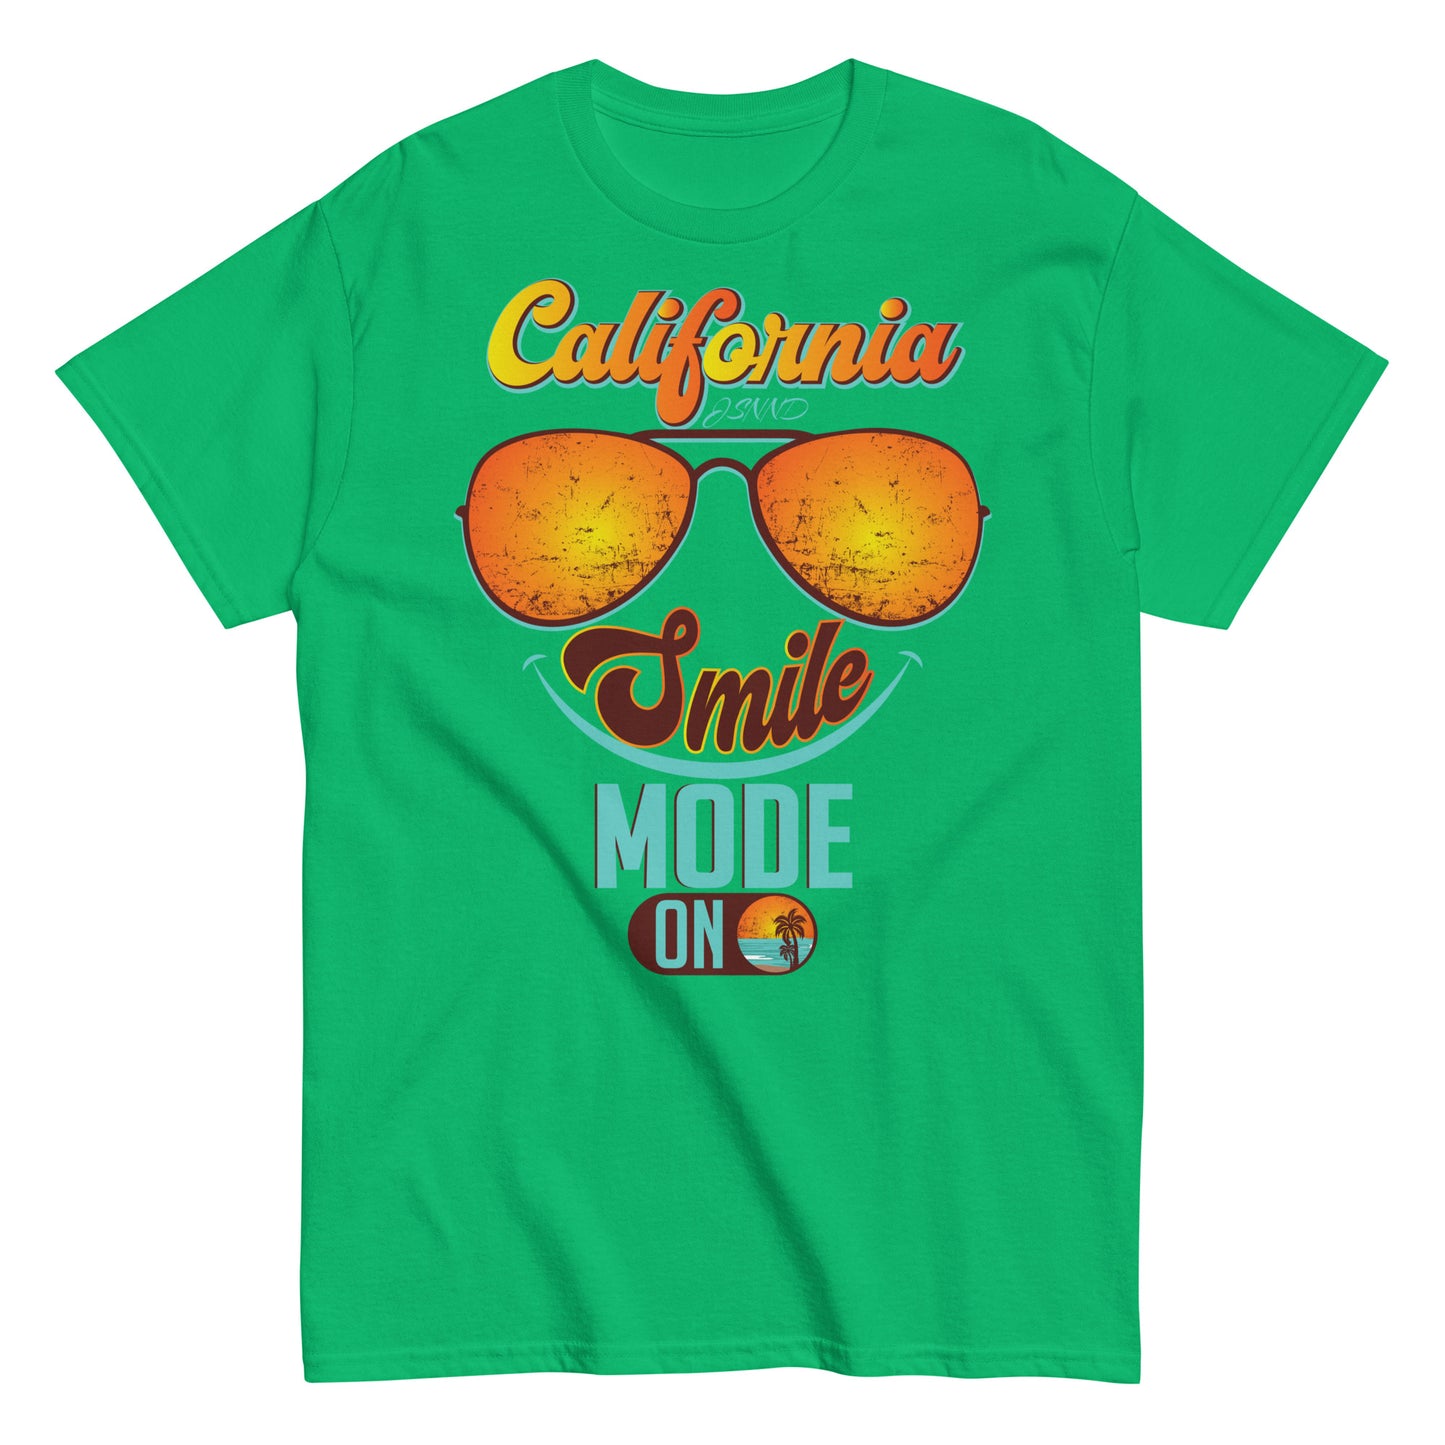 California Smile classic tee